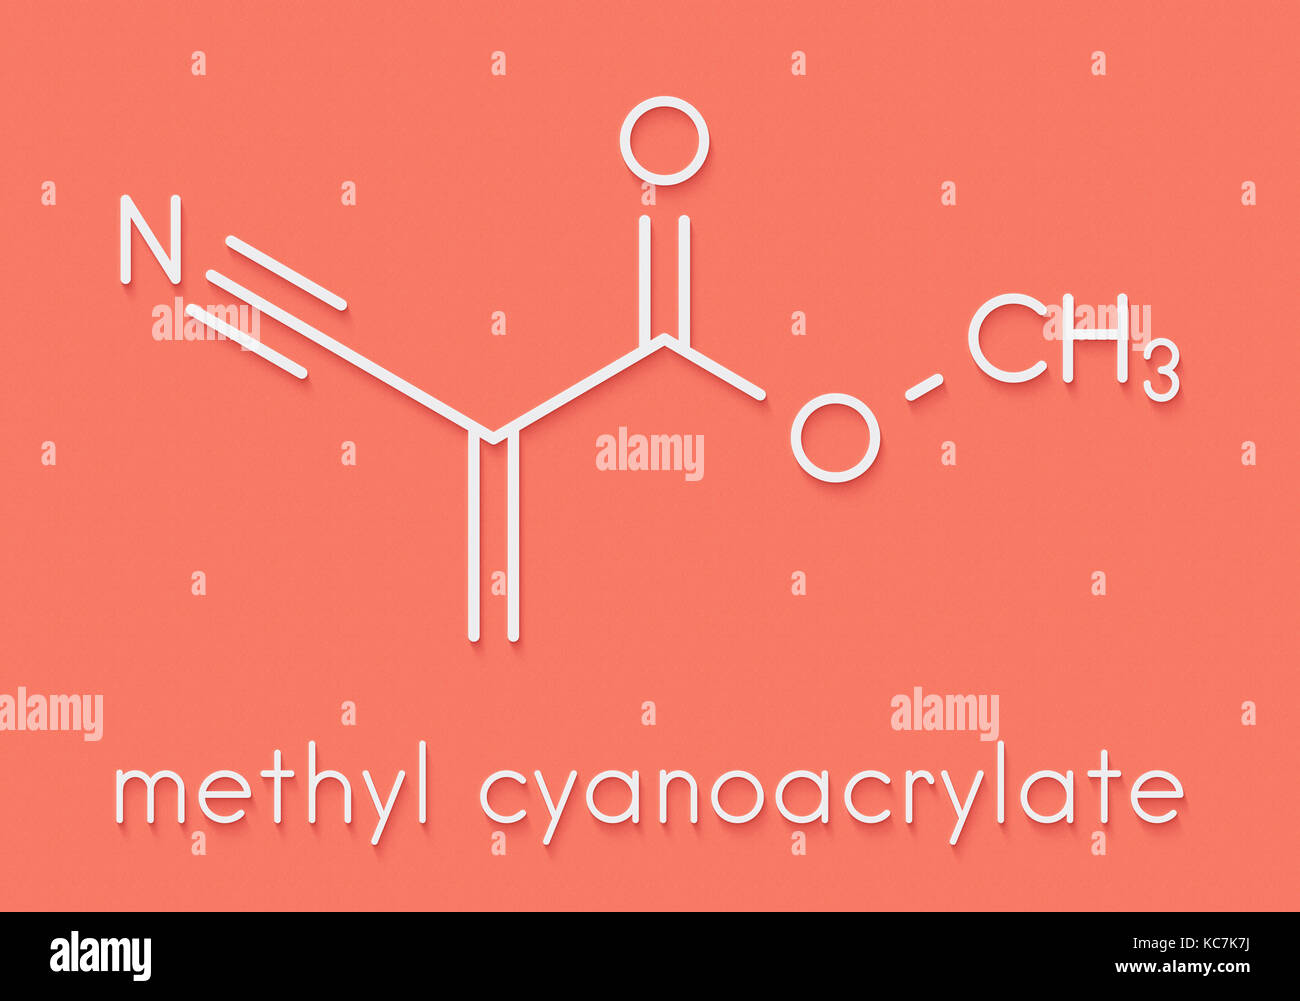 Superglue - cyanoacrylate - Molecule of the Month - July 2009